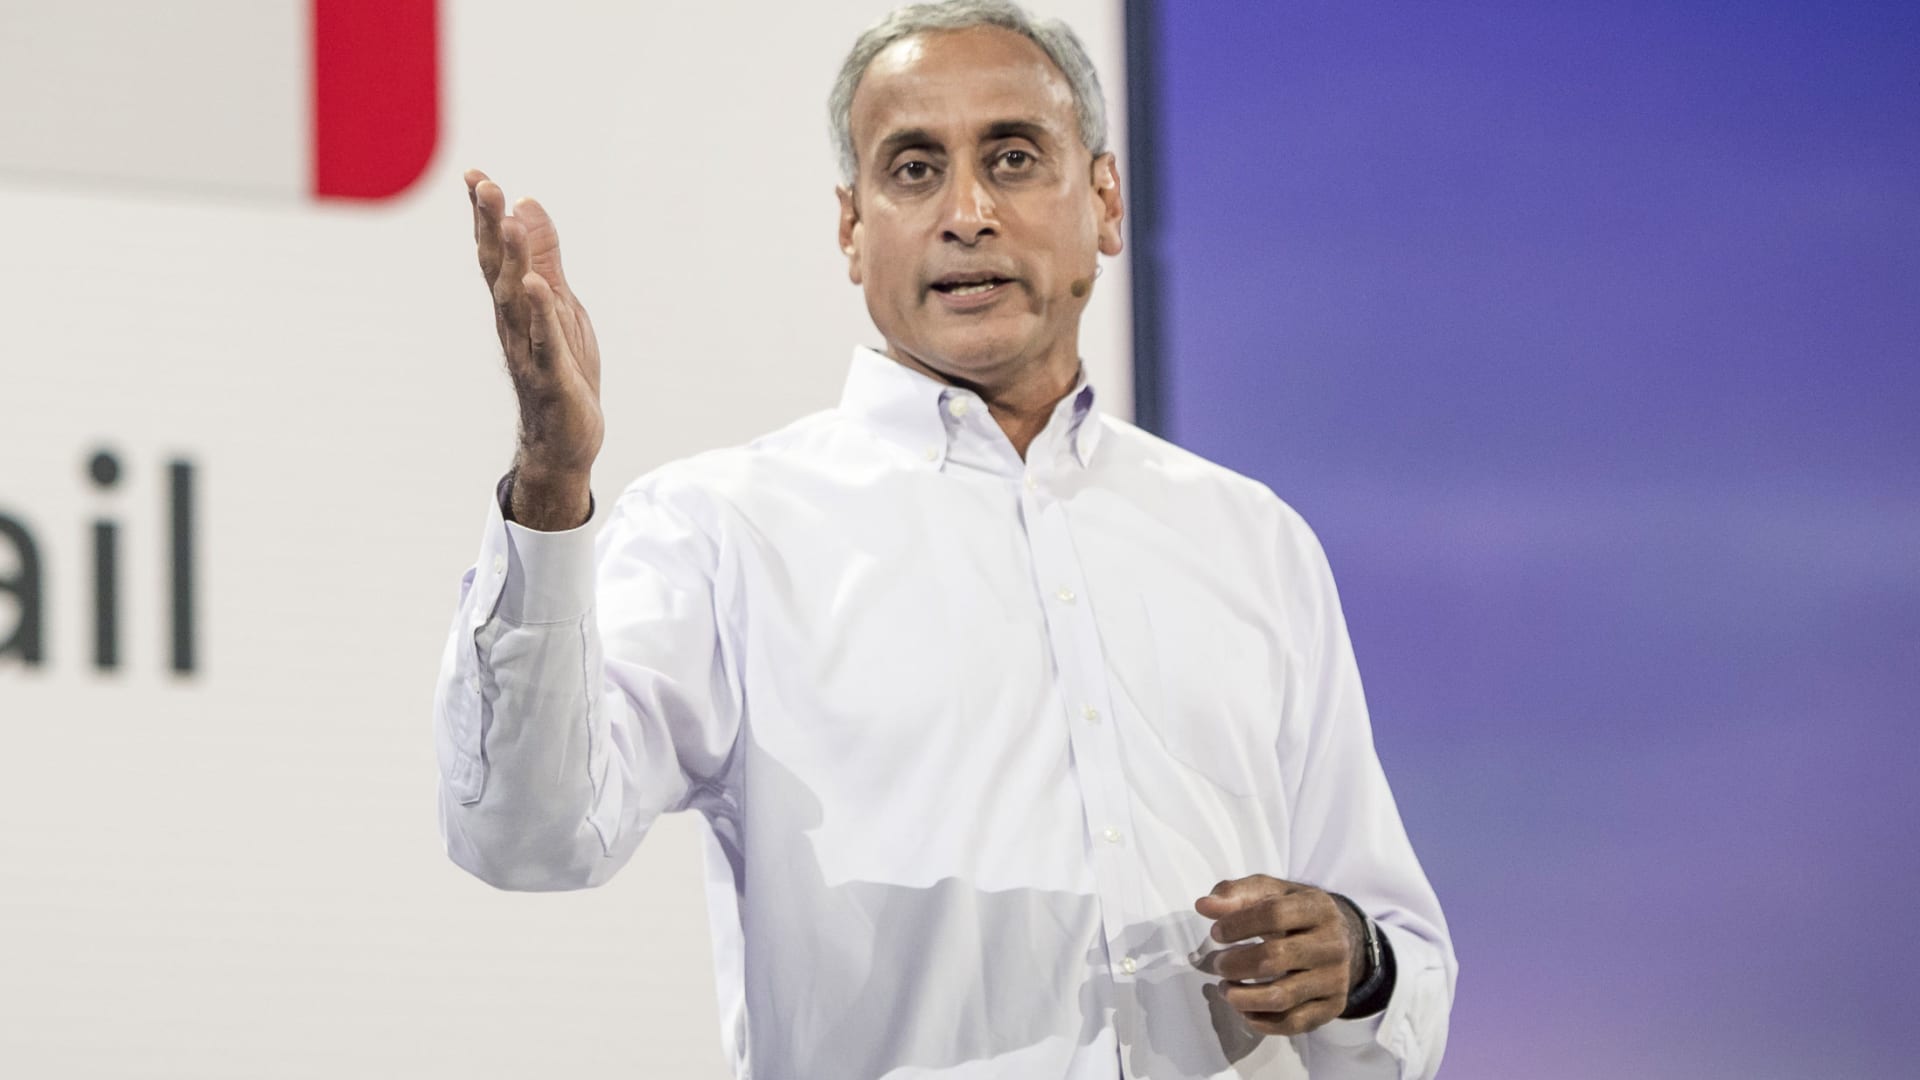 Google search boss Raghavan warns employees of ‘new operating reality’